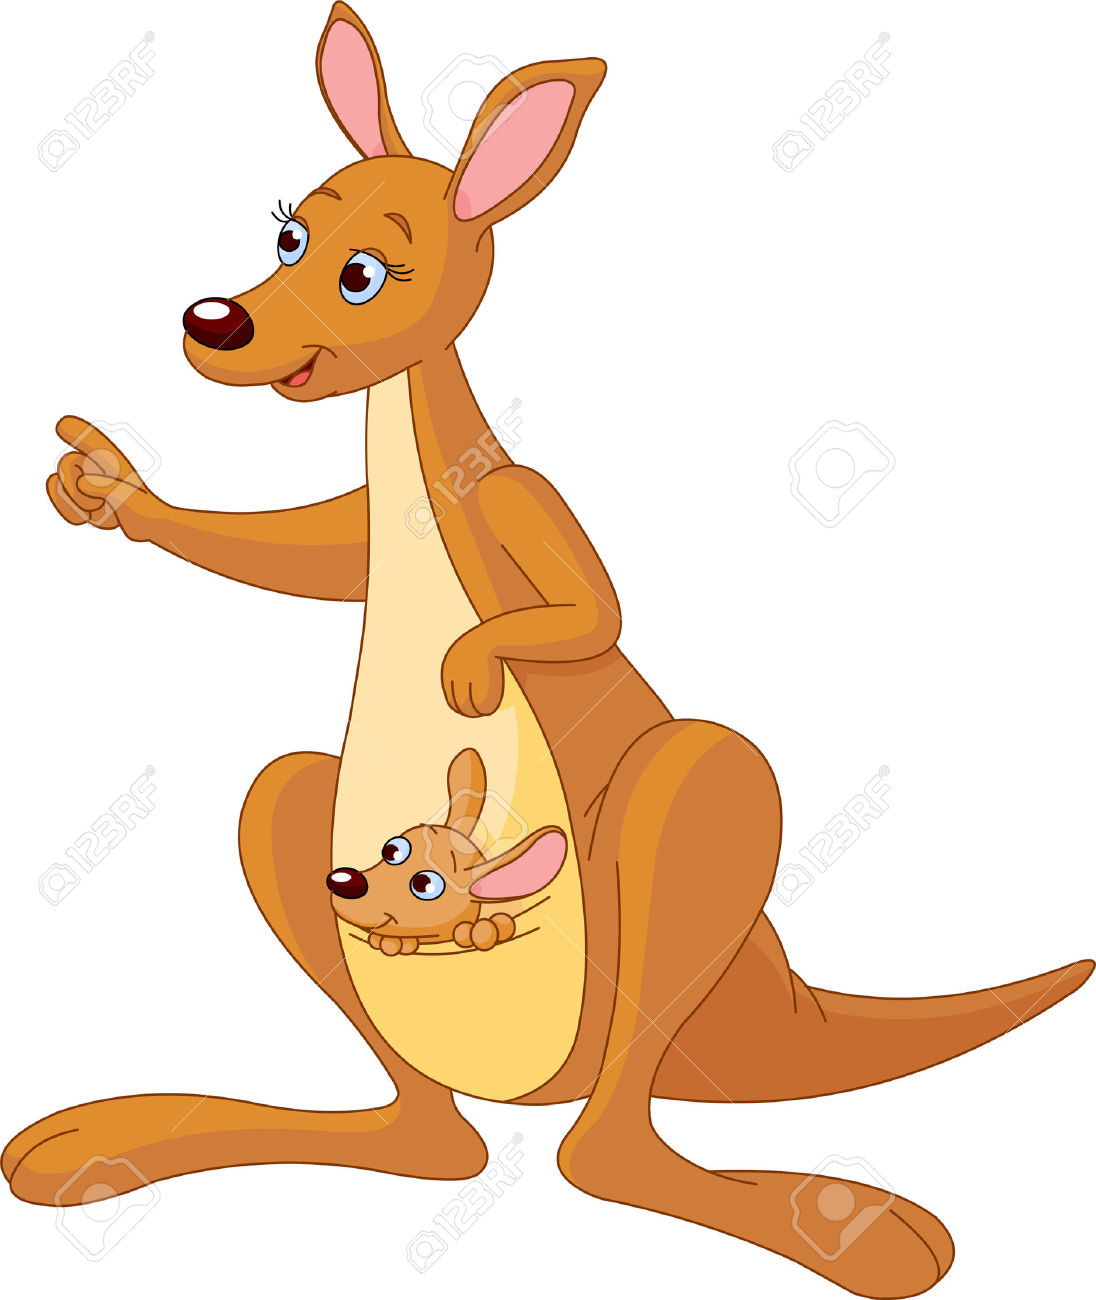 Cartoon free download best. Kangaroo clipart mother kangaroo